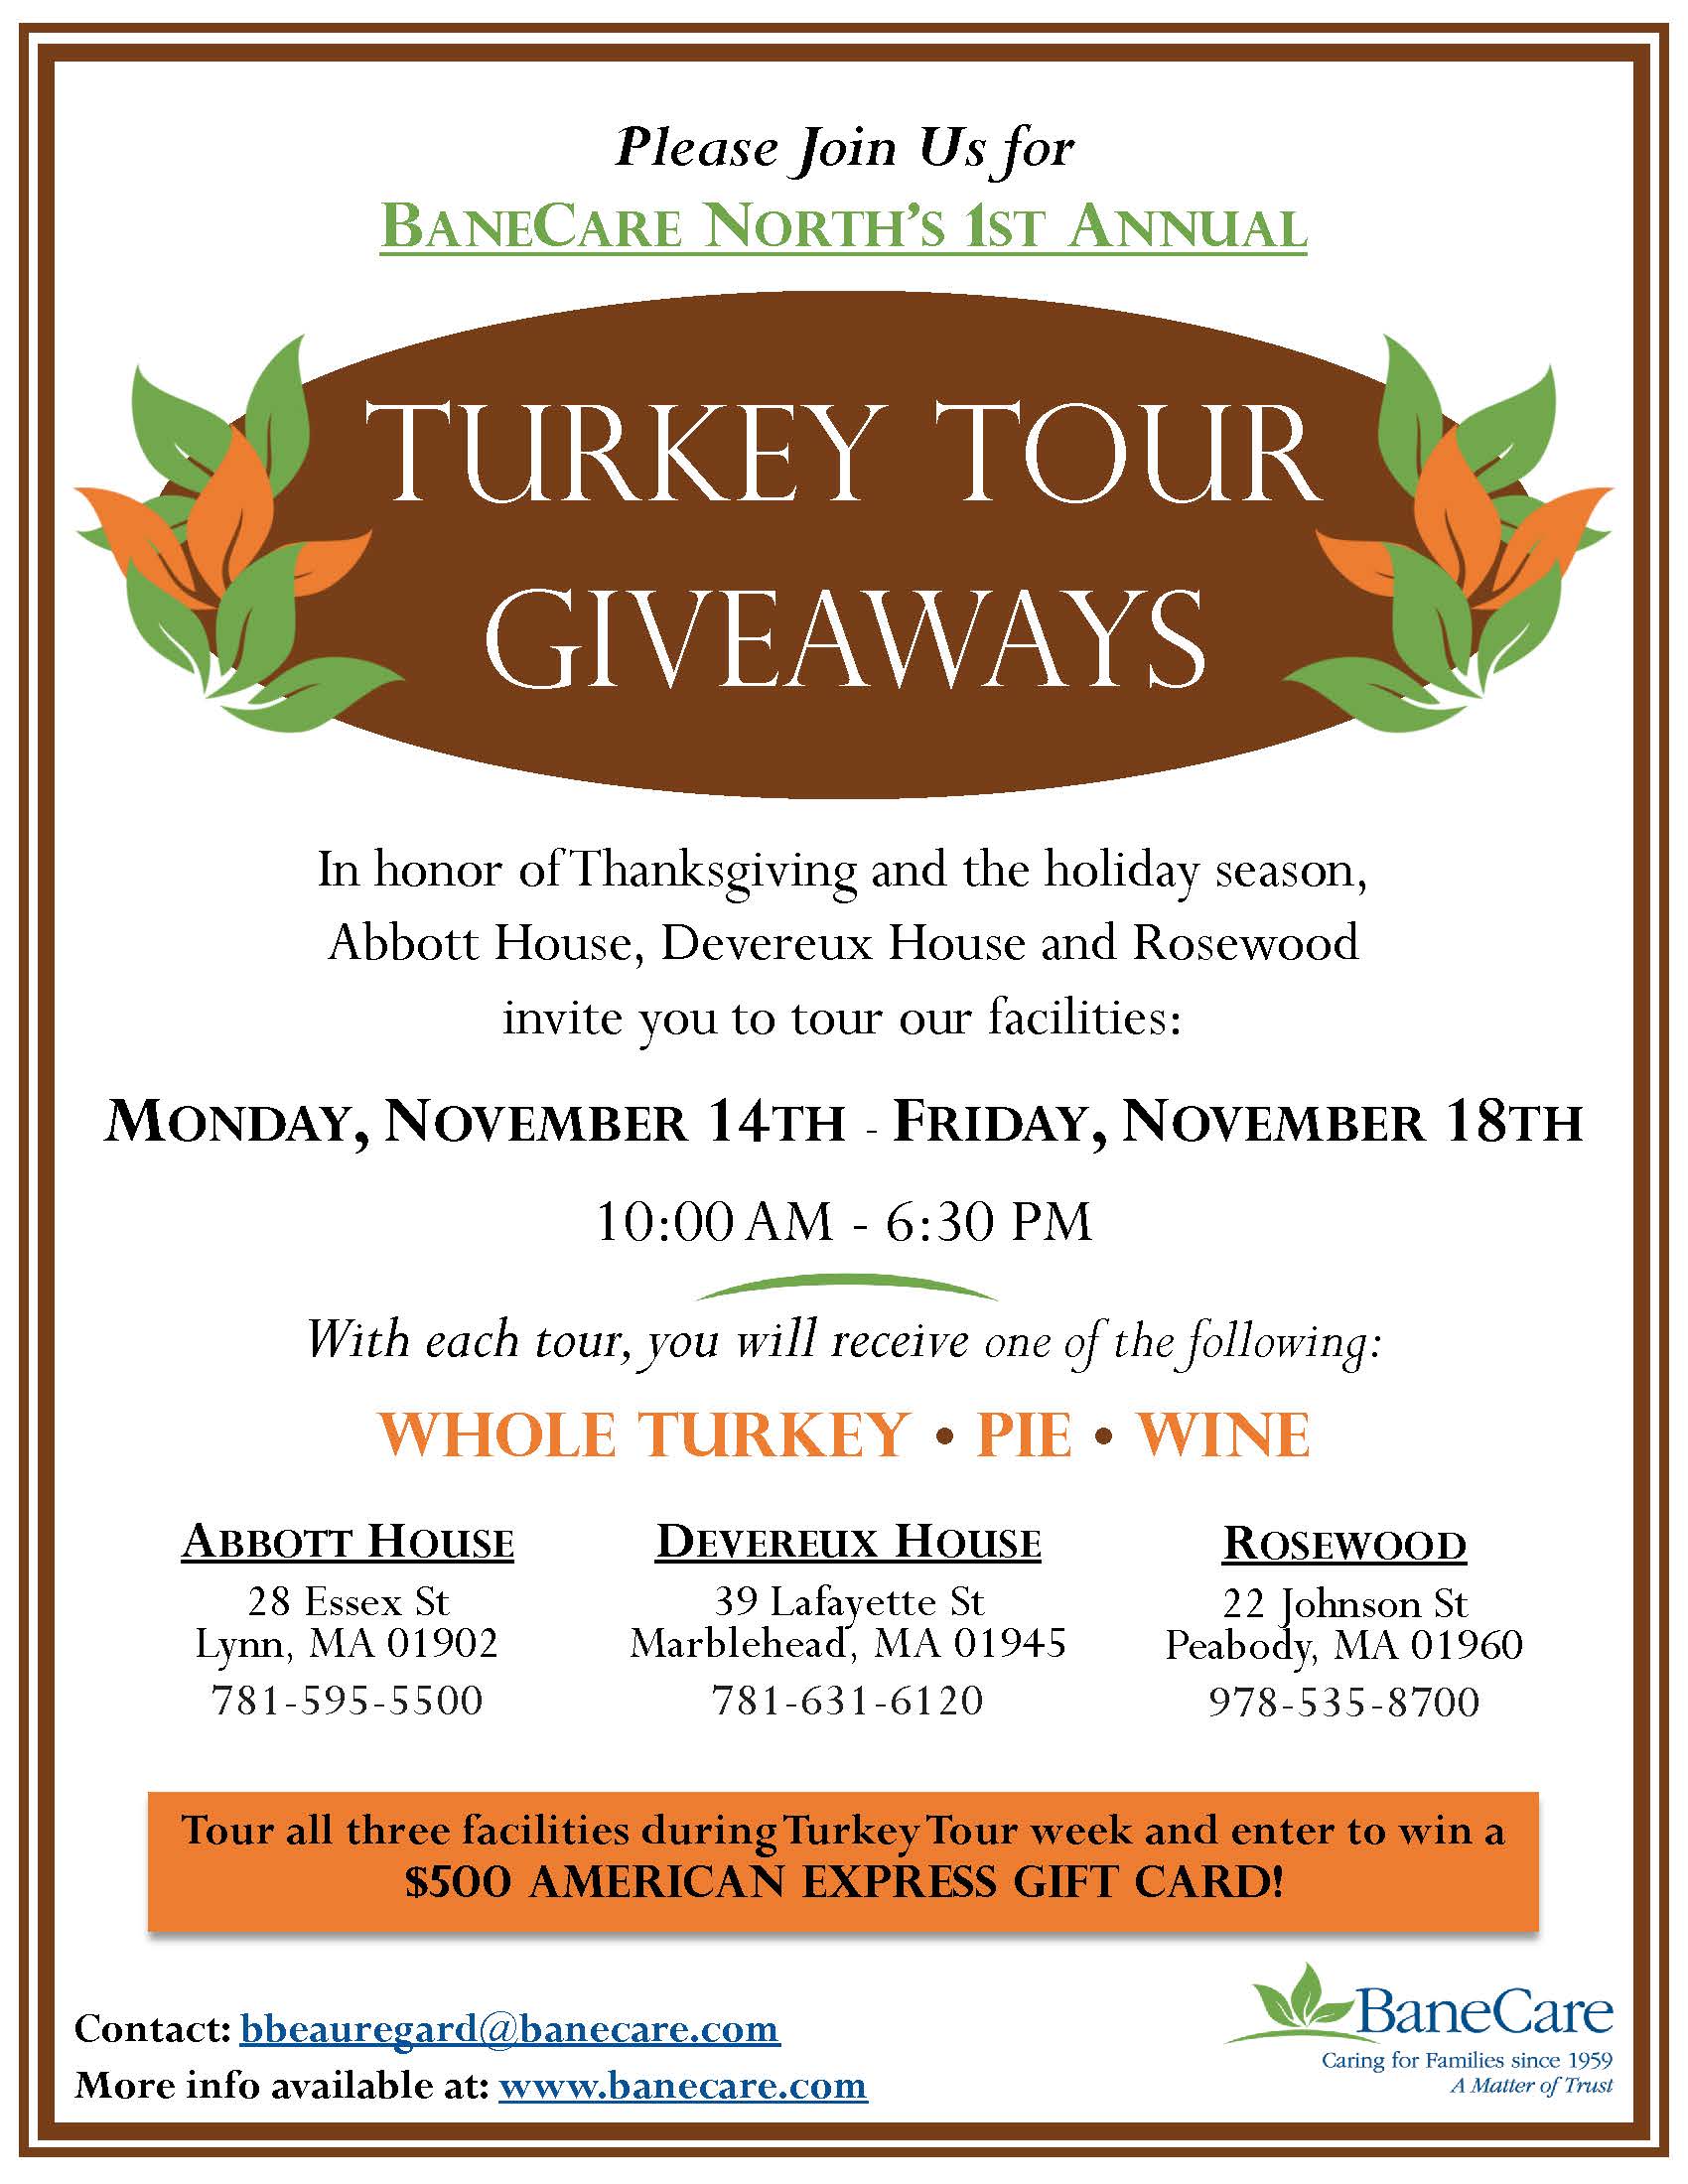 Turkey Tour Giveaway Week at BaneCare North, Nov 14 - Nov 18.pdf